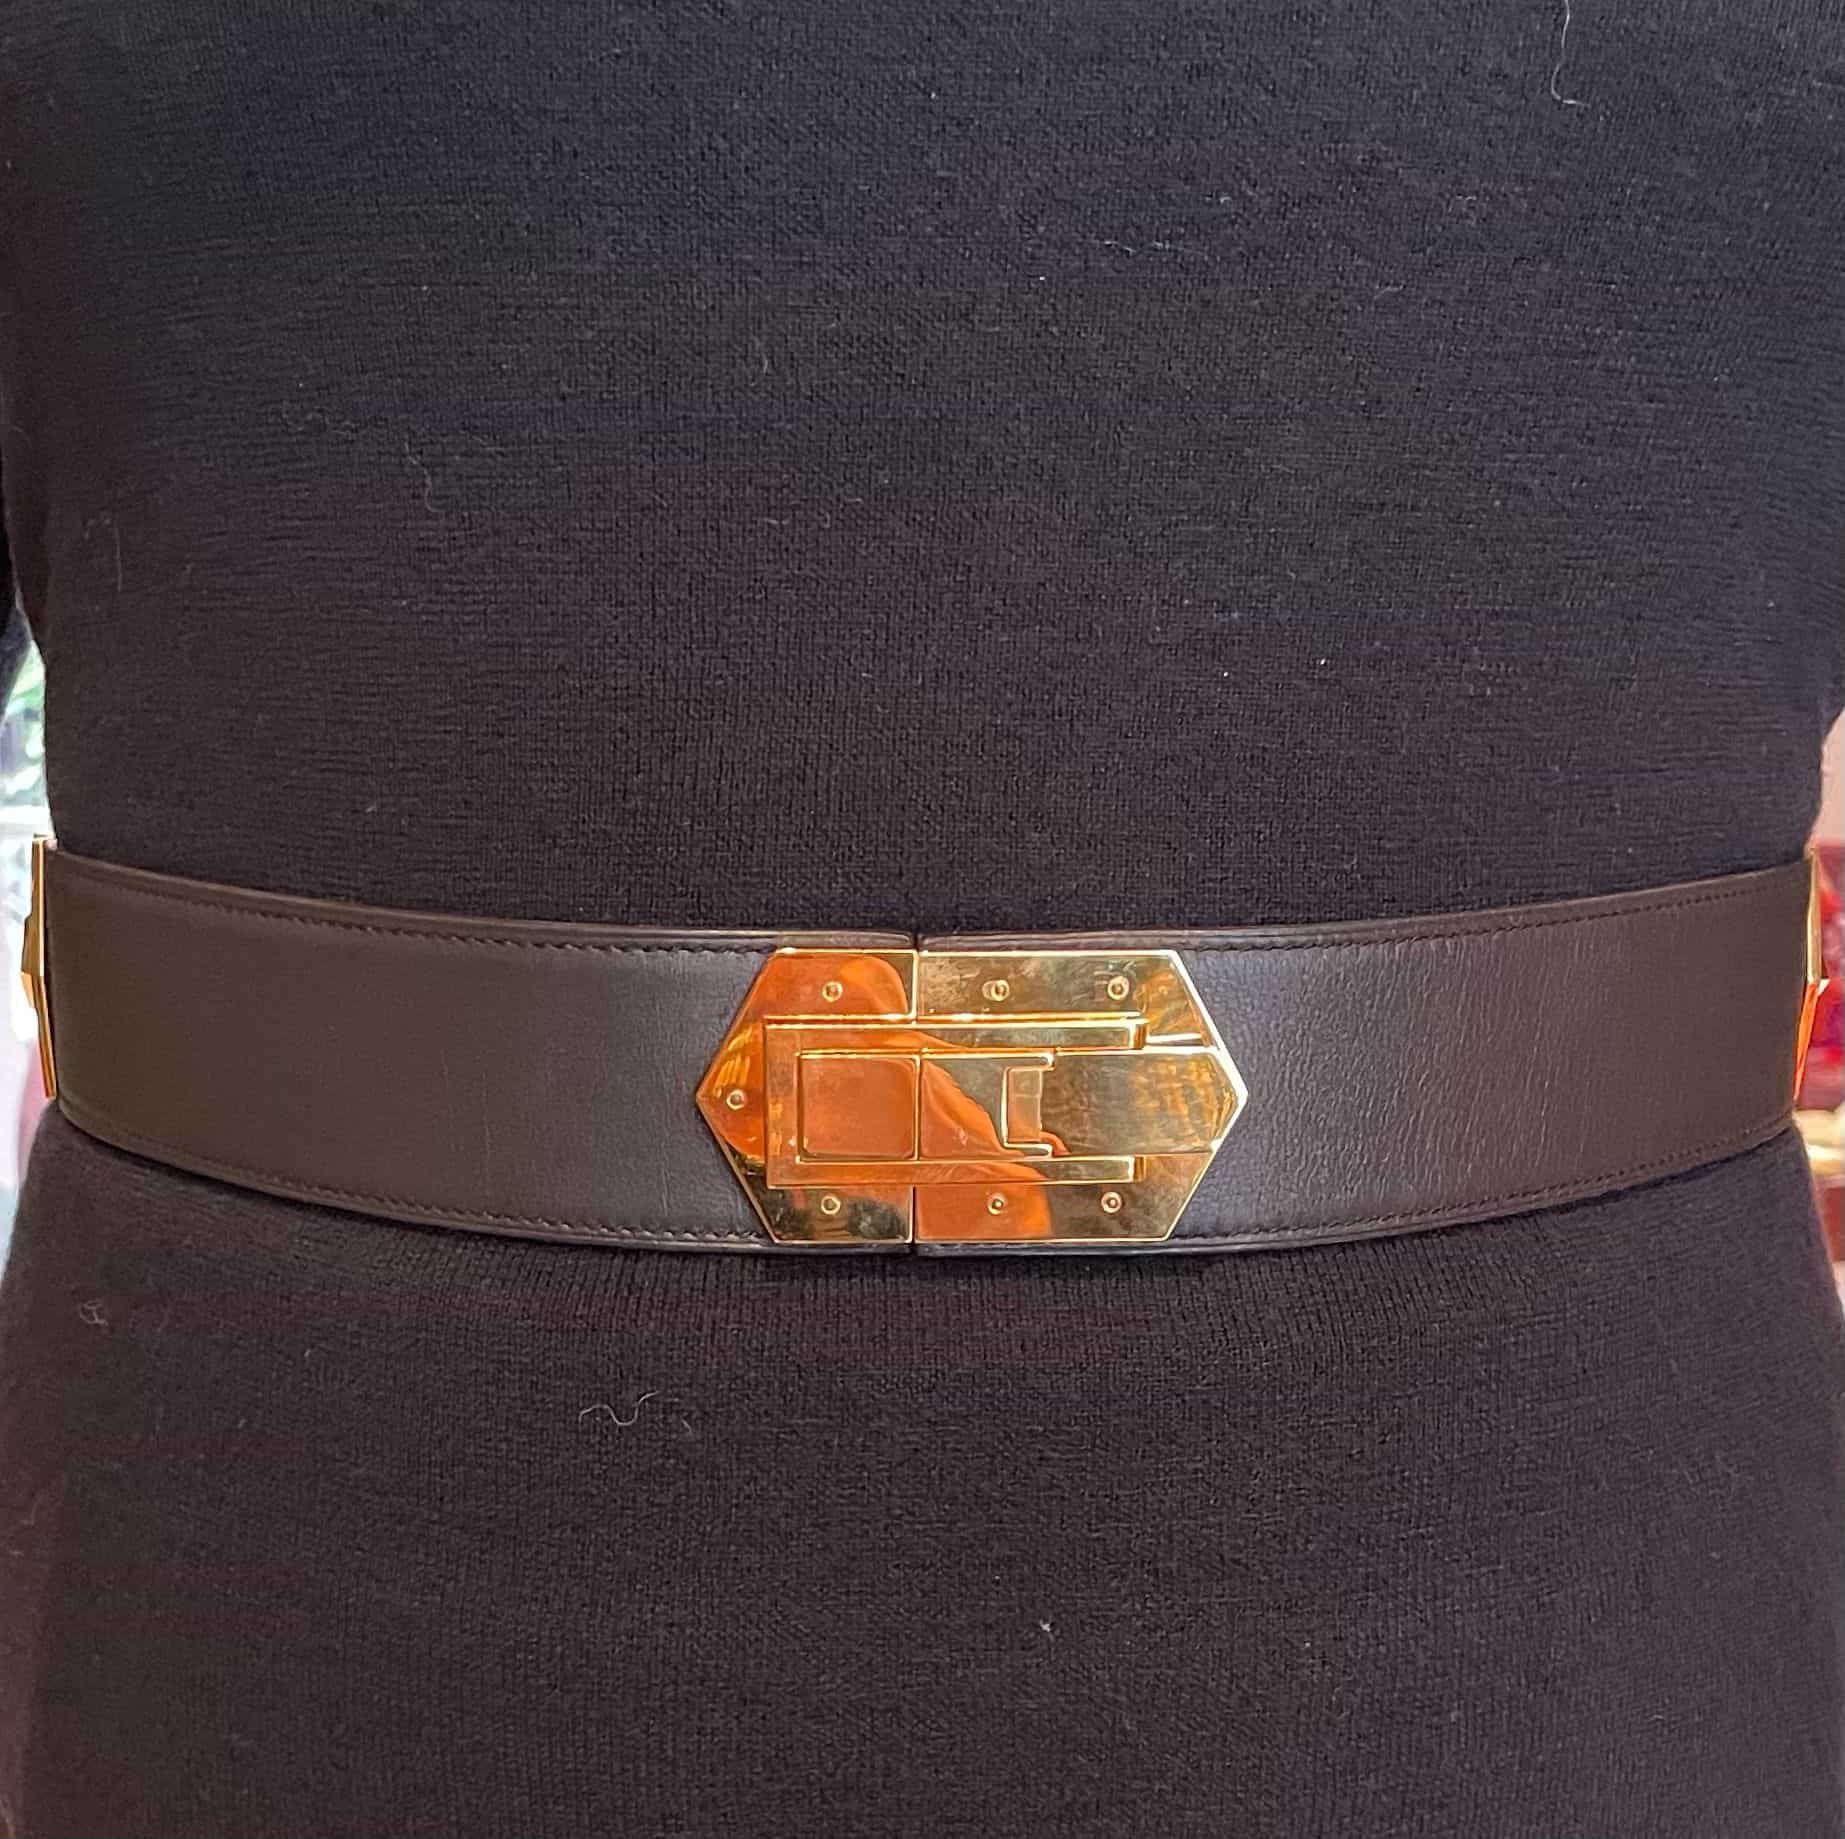 Hermes leather belt (garden lock) with gold hardware